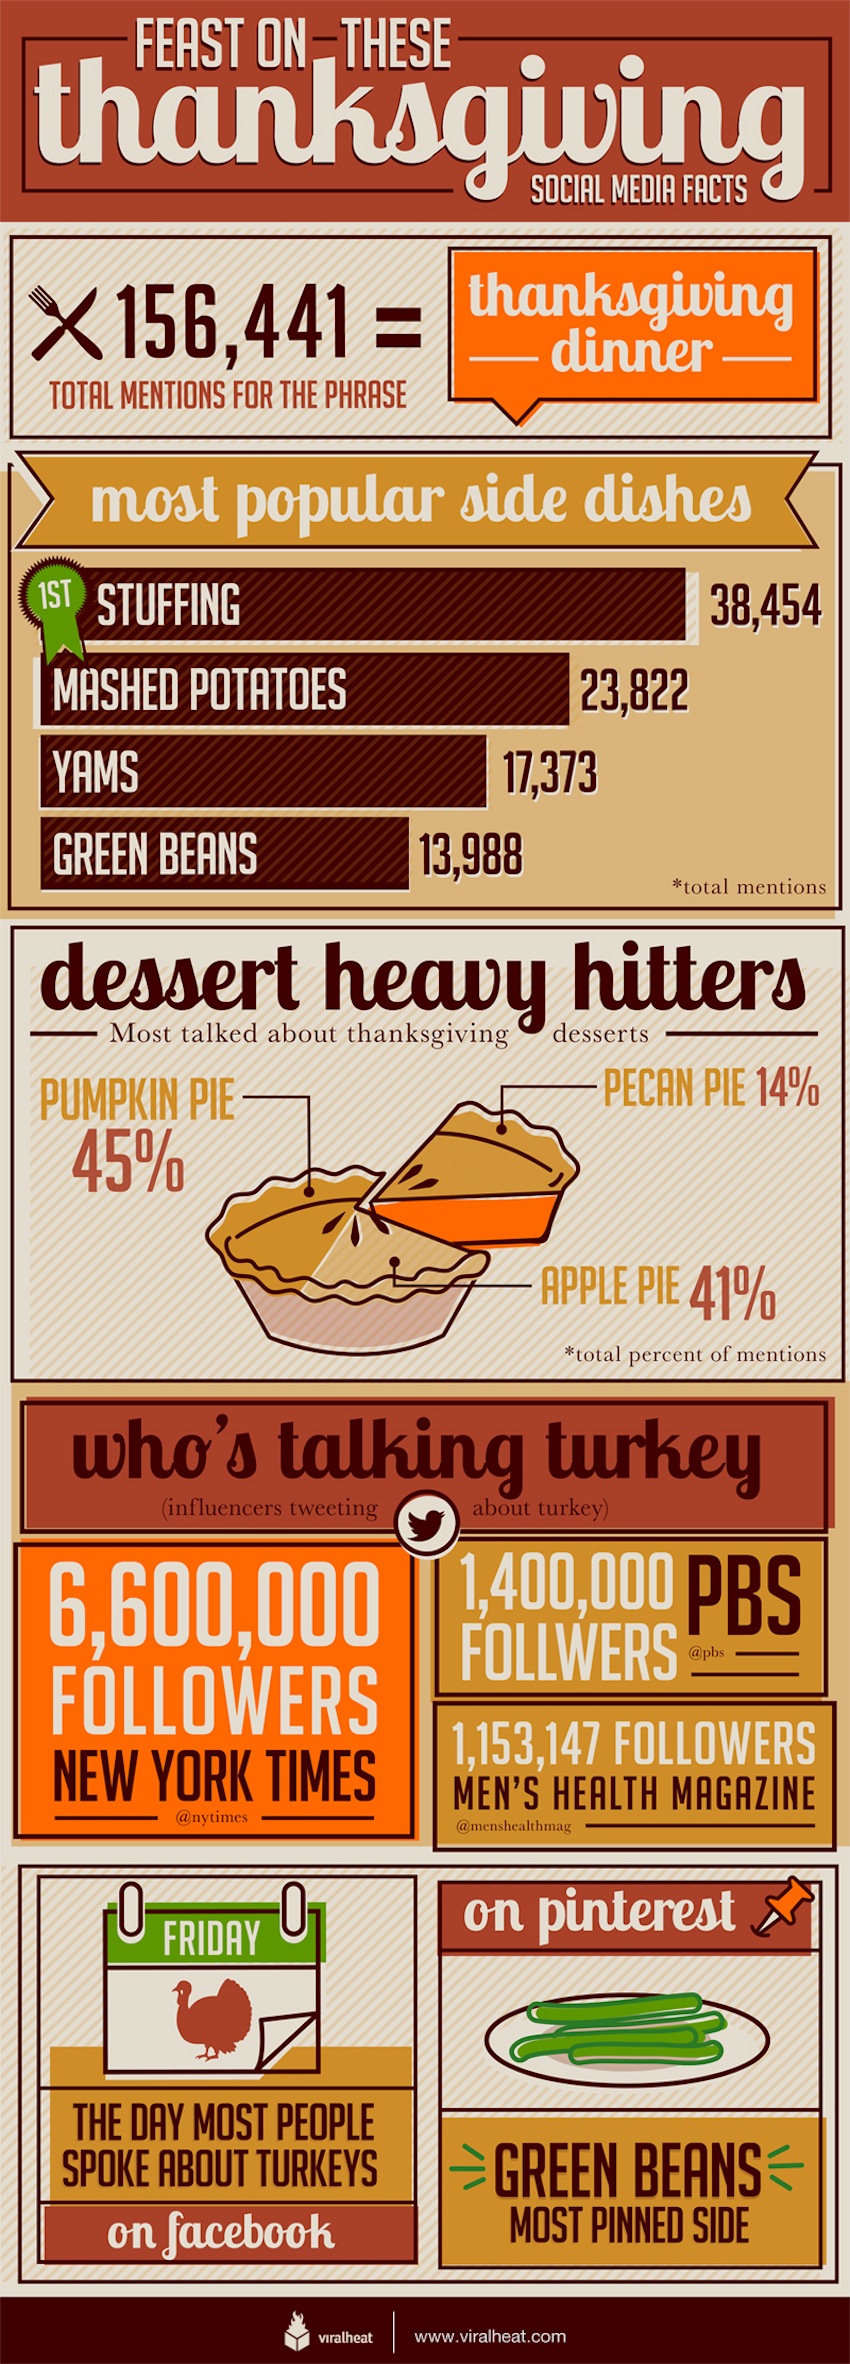 social-media-american-thanksgiving-infographic